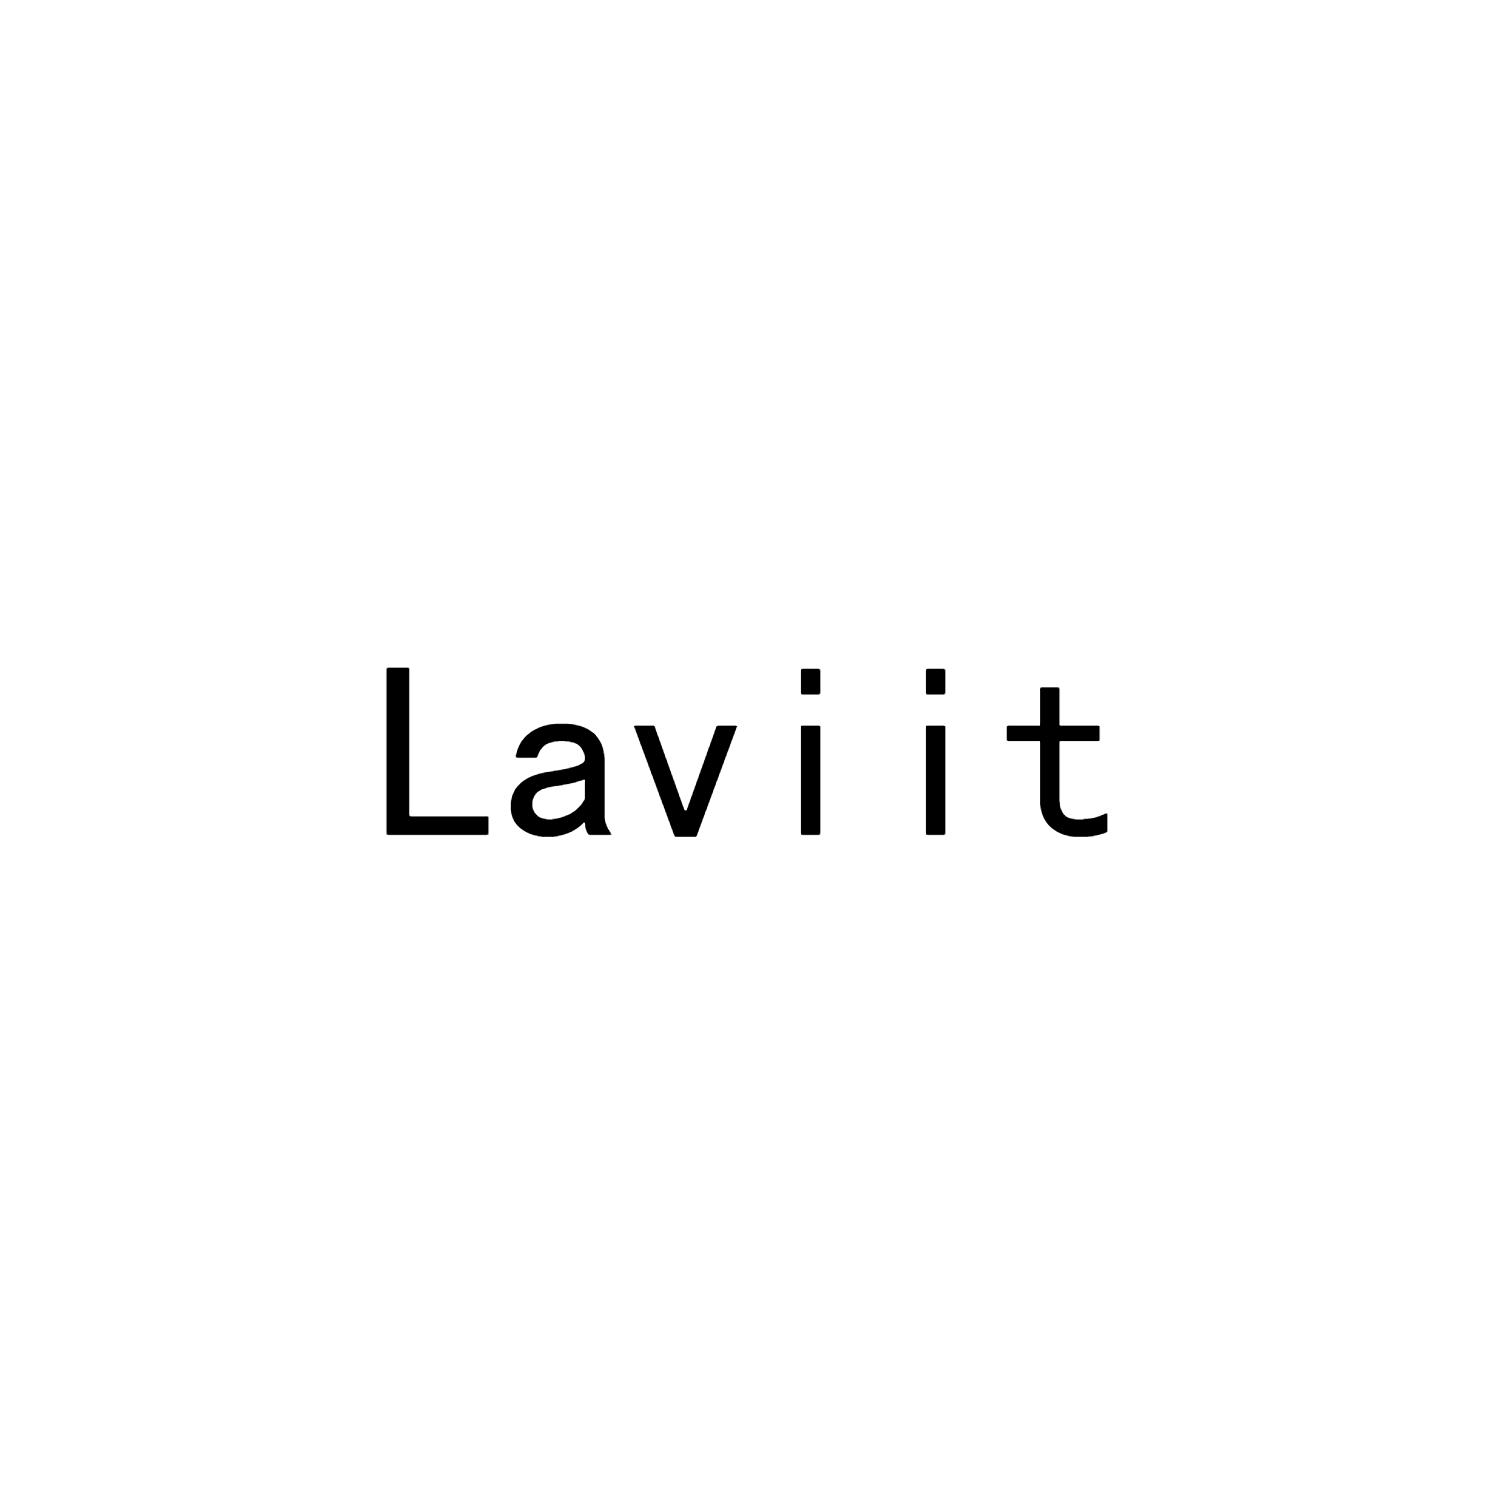 LAVIIT